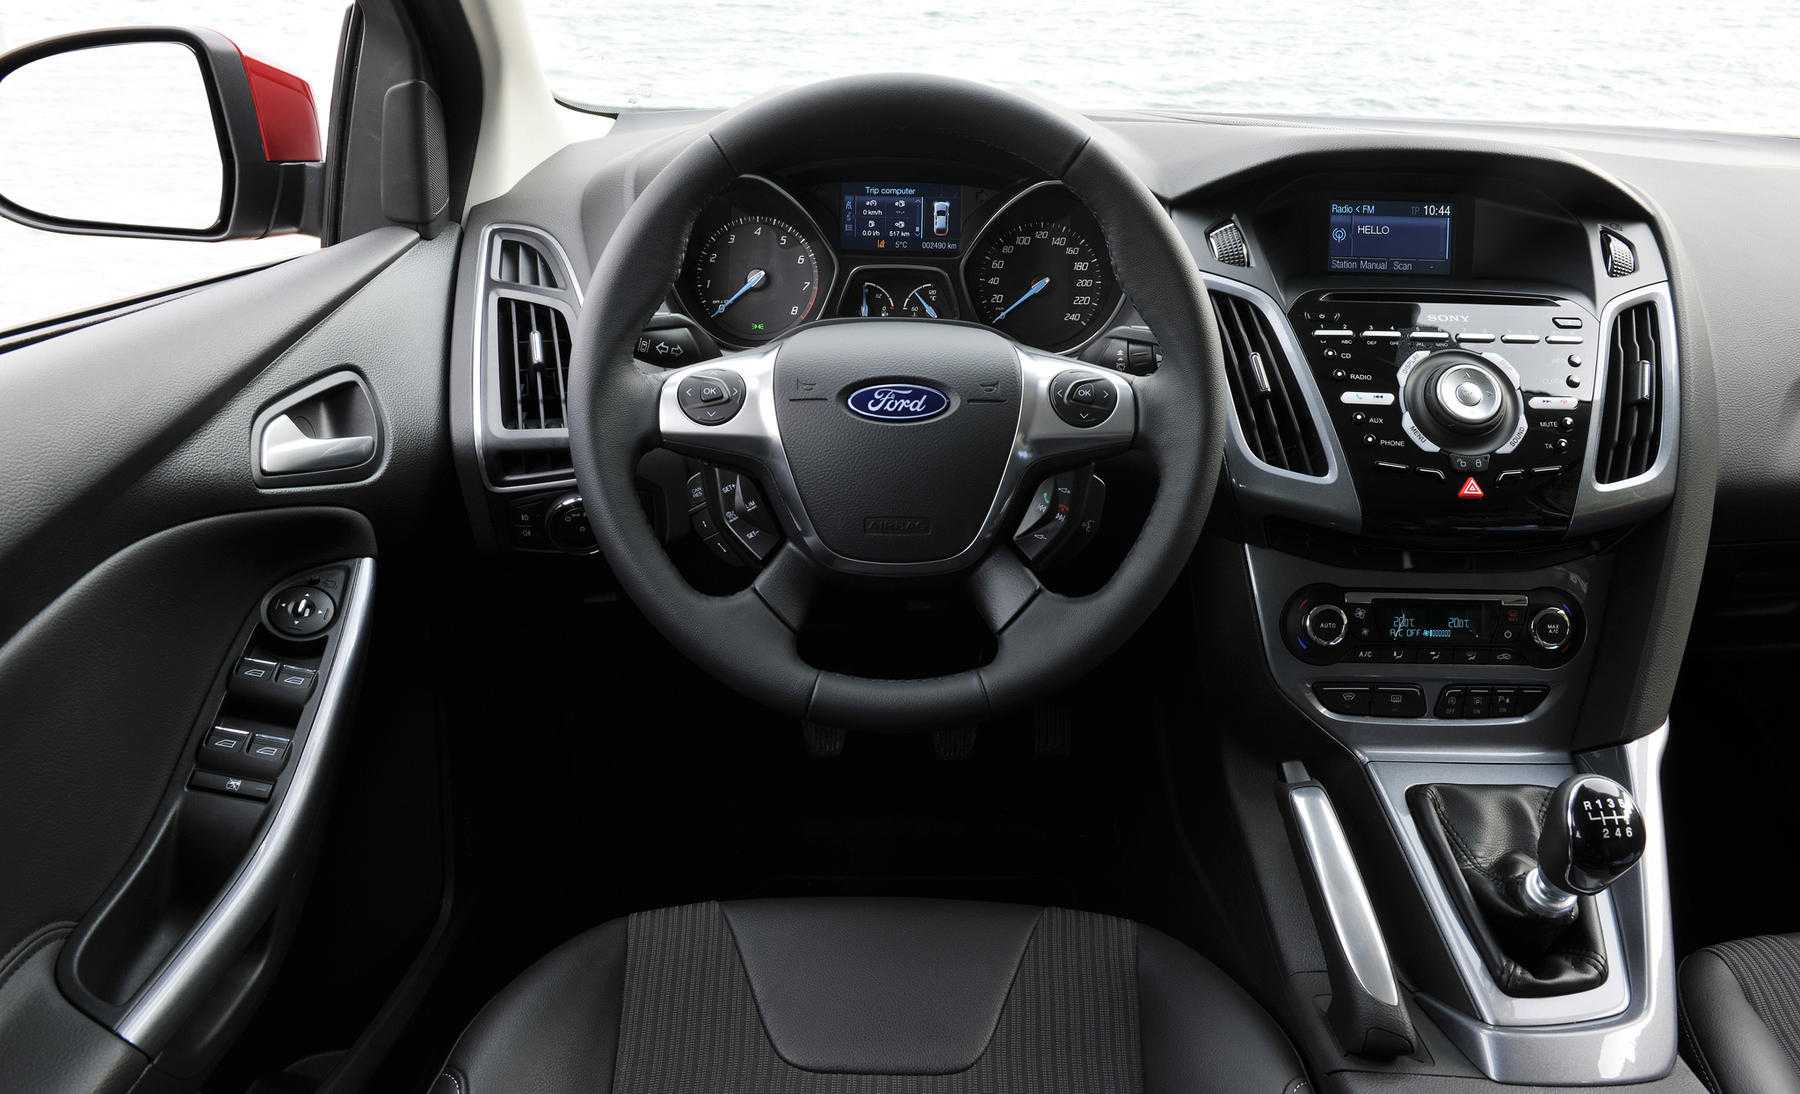 Ford focus 1.6 mt sync edition (07.2015 - 05.2018) - технические характеристики